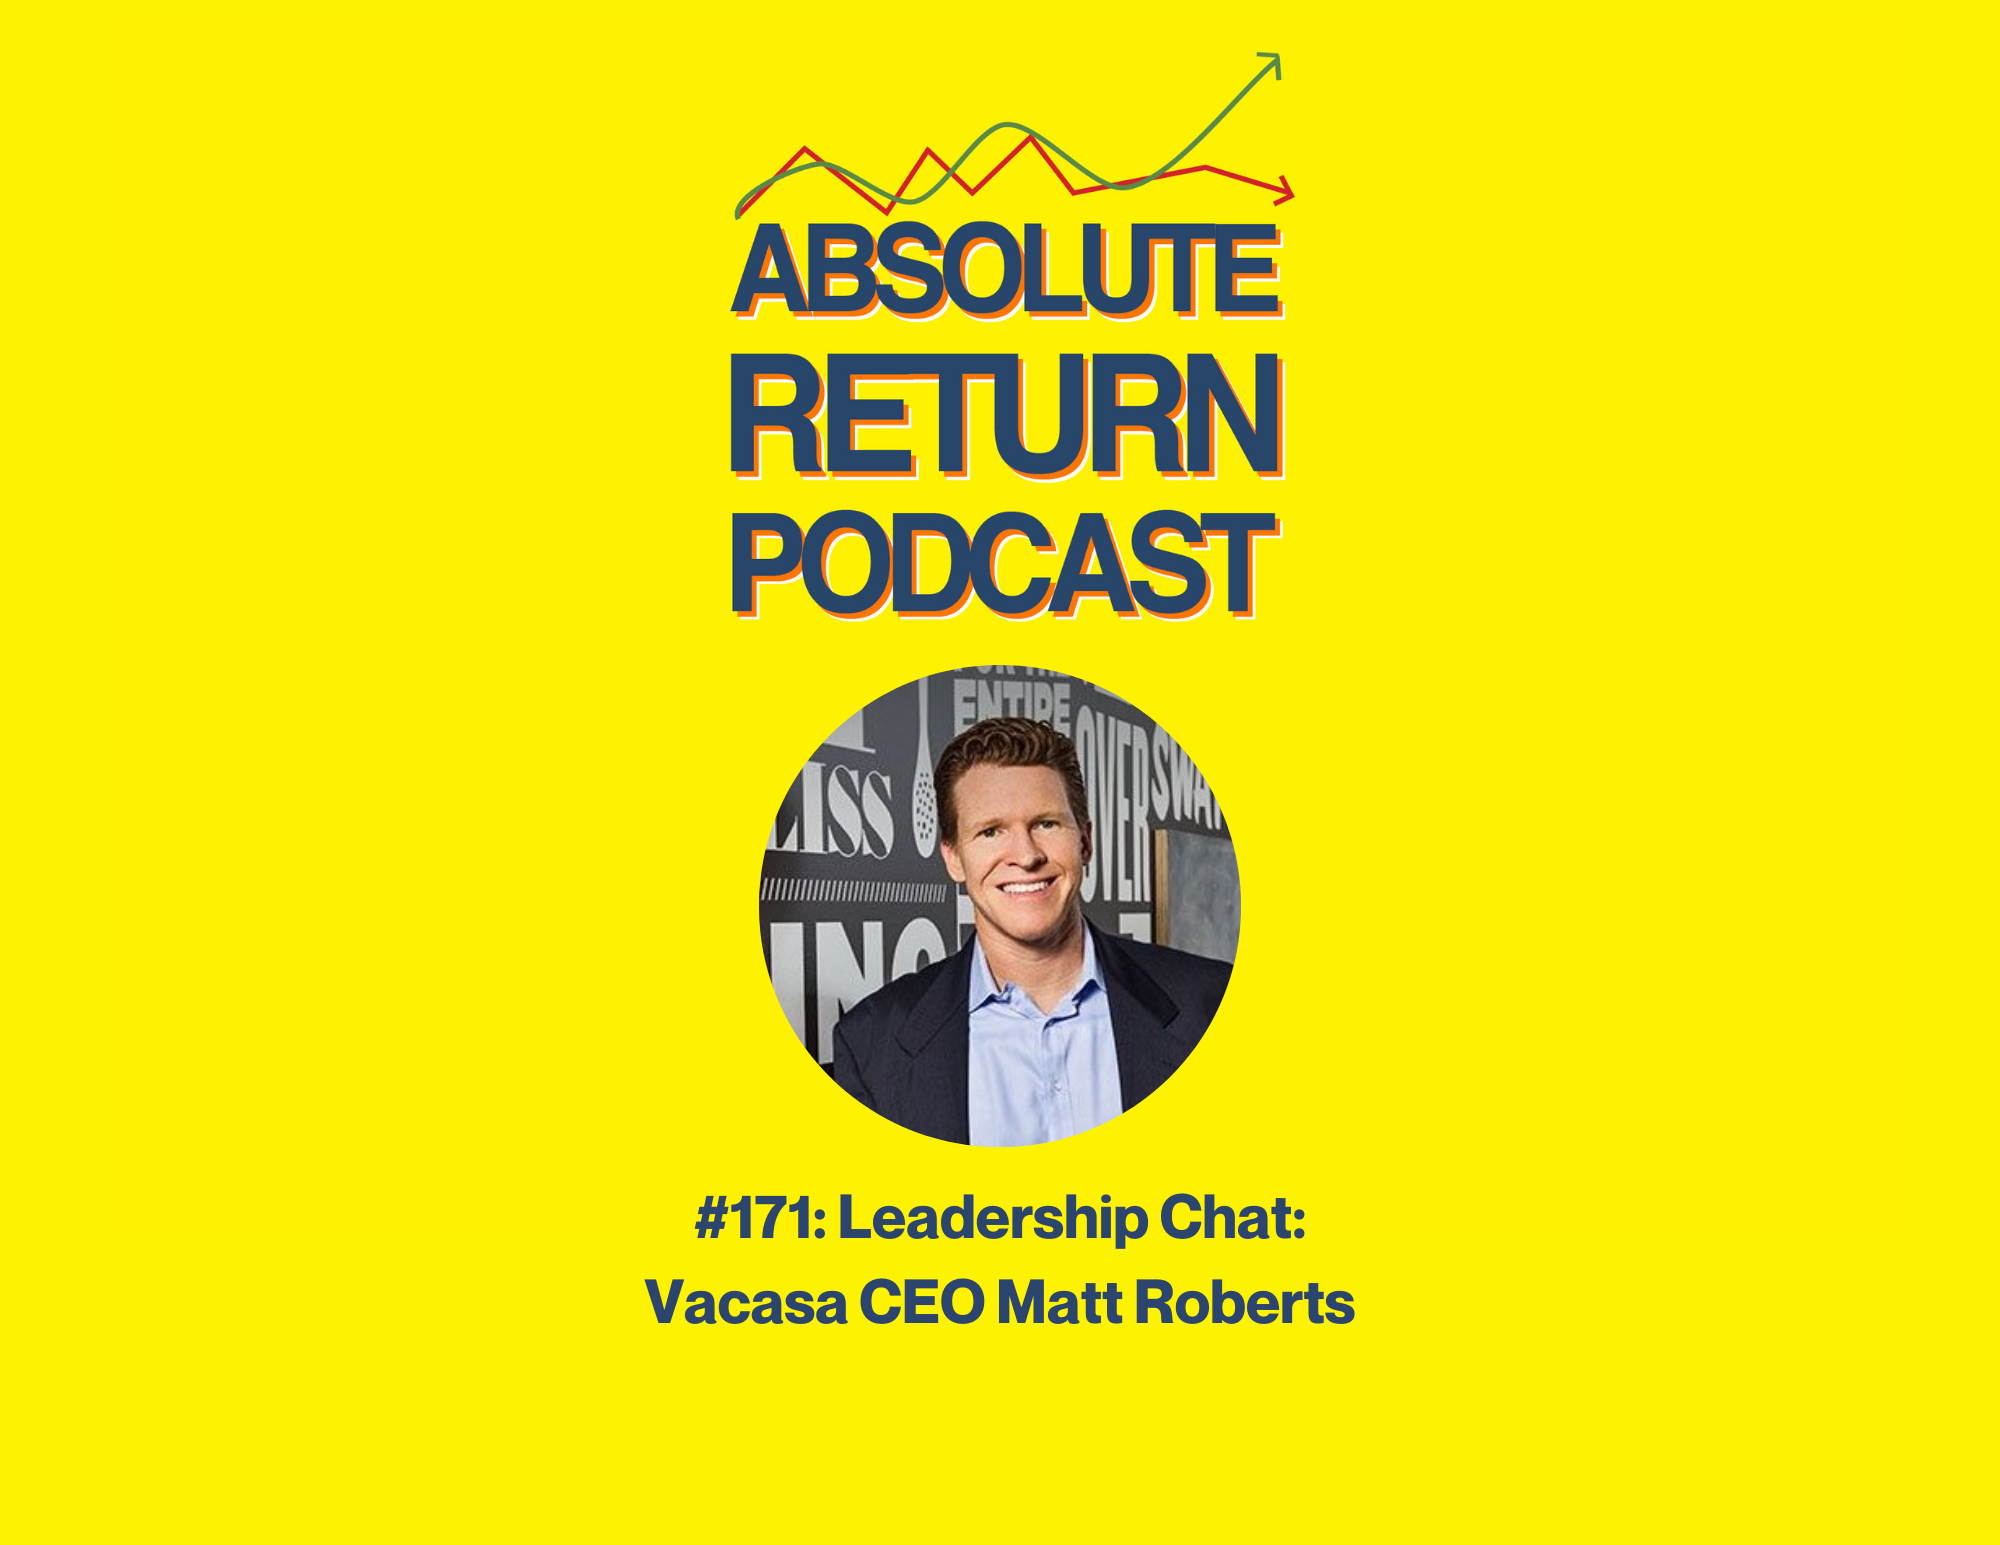 Absolute Return Podcast #171: Leadership Chat: Vacasa CEO Matt Roberts